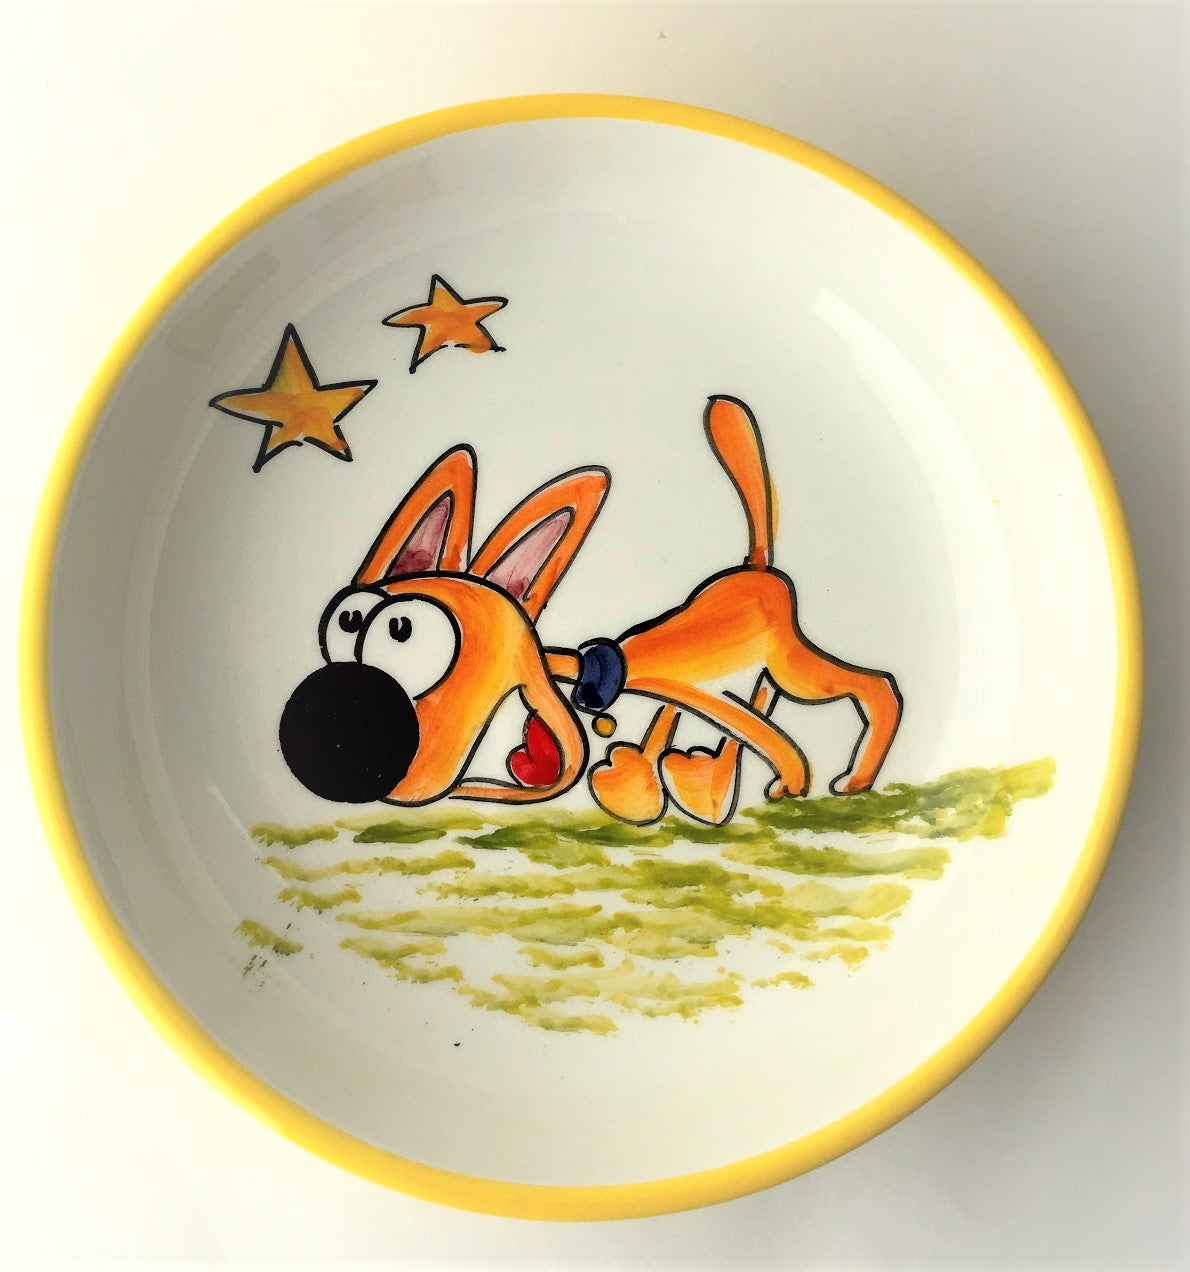 Digging Dog Ceramic Bowls